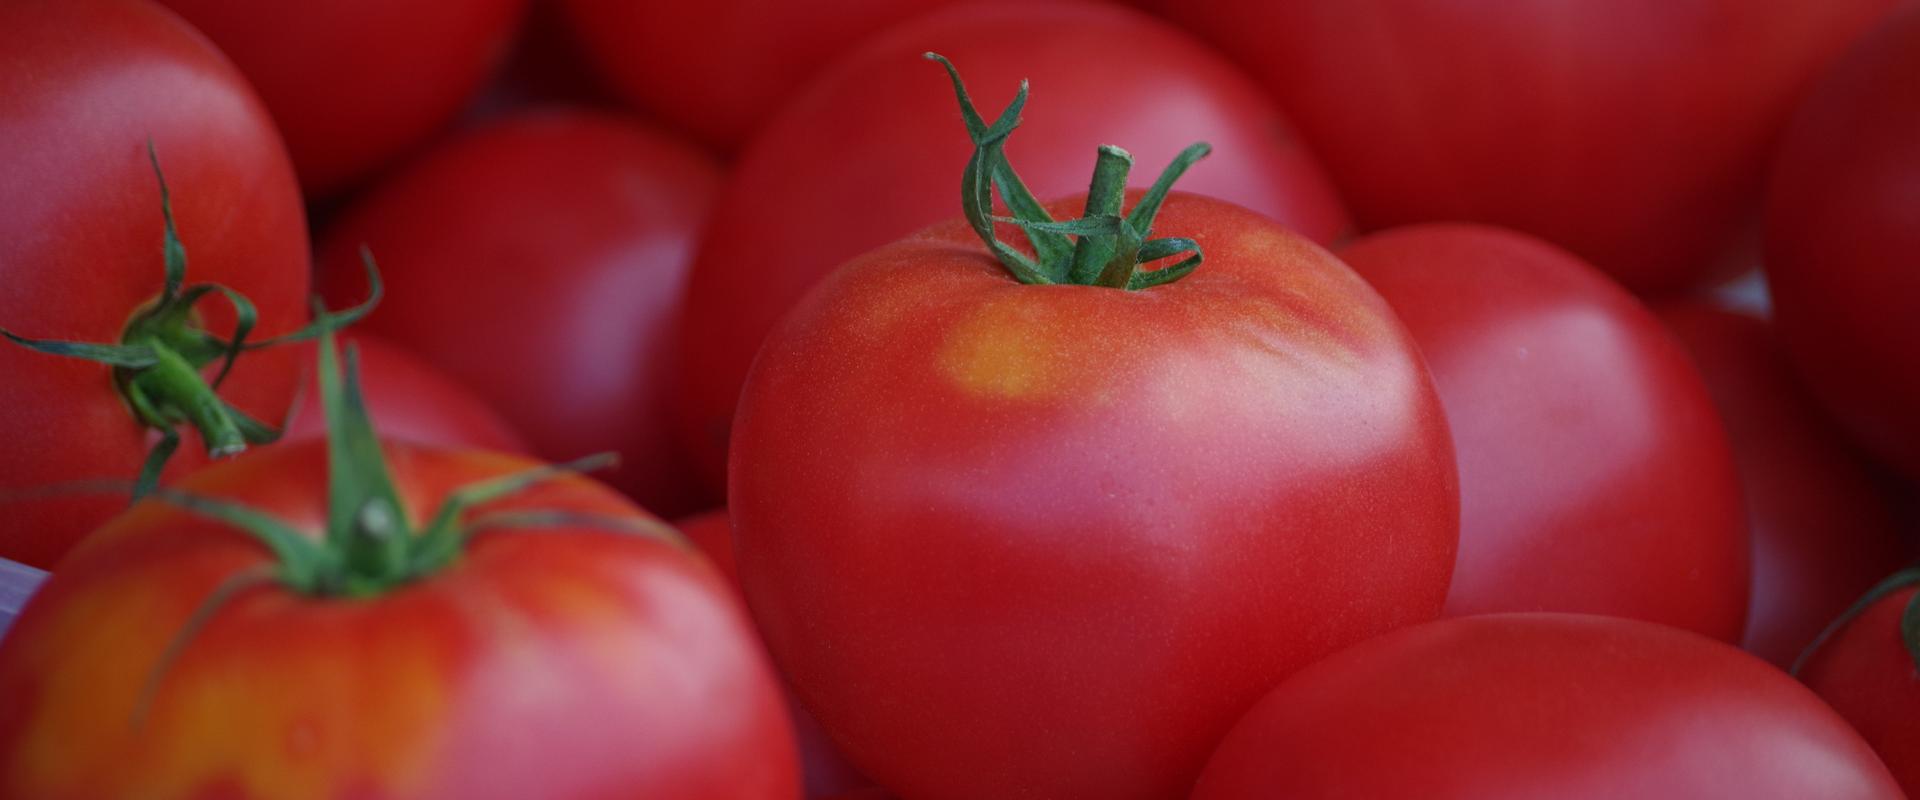 Tartu Market, ripe tomatoes